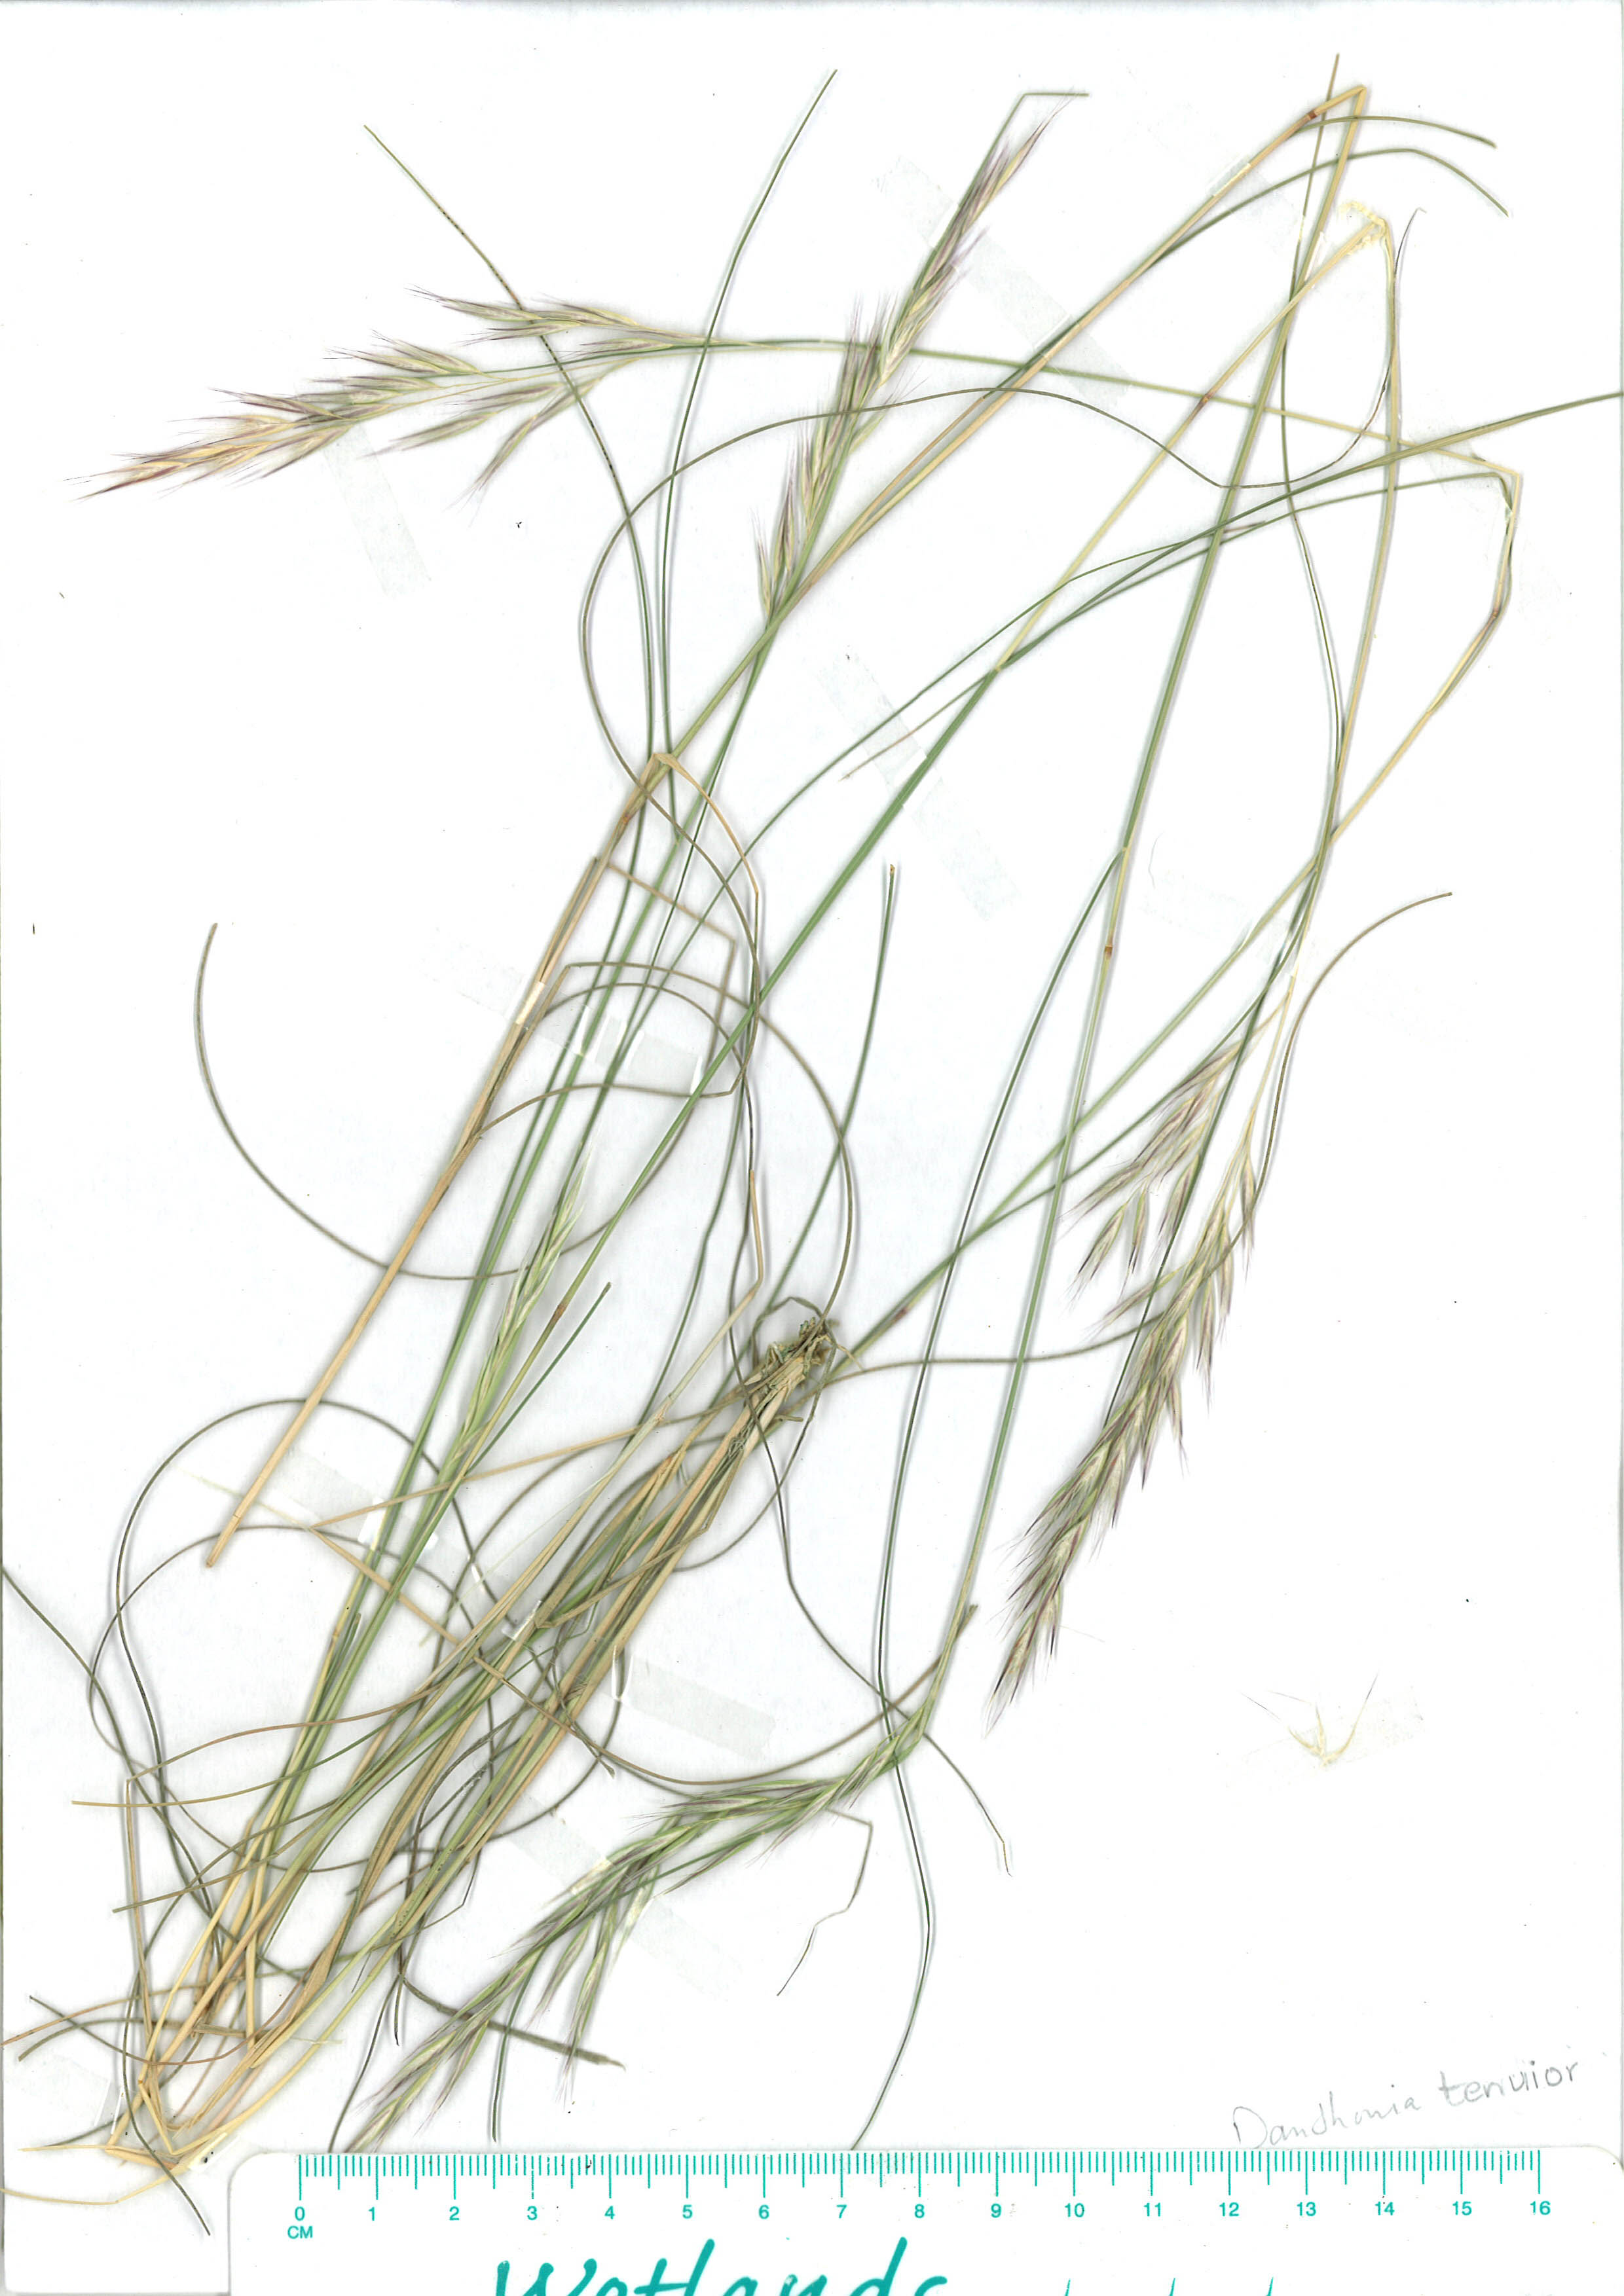 Scanned image of herbarium image of Austrodanthonia tenuior